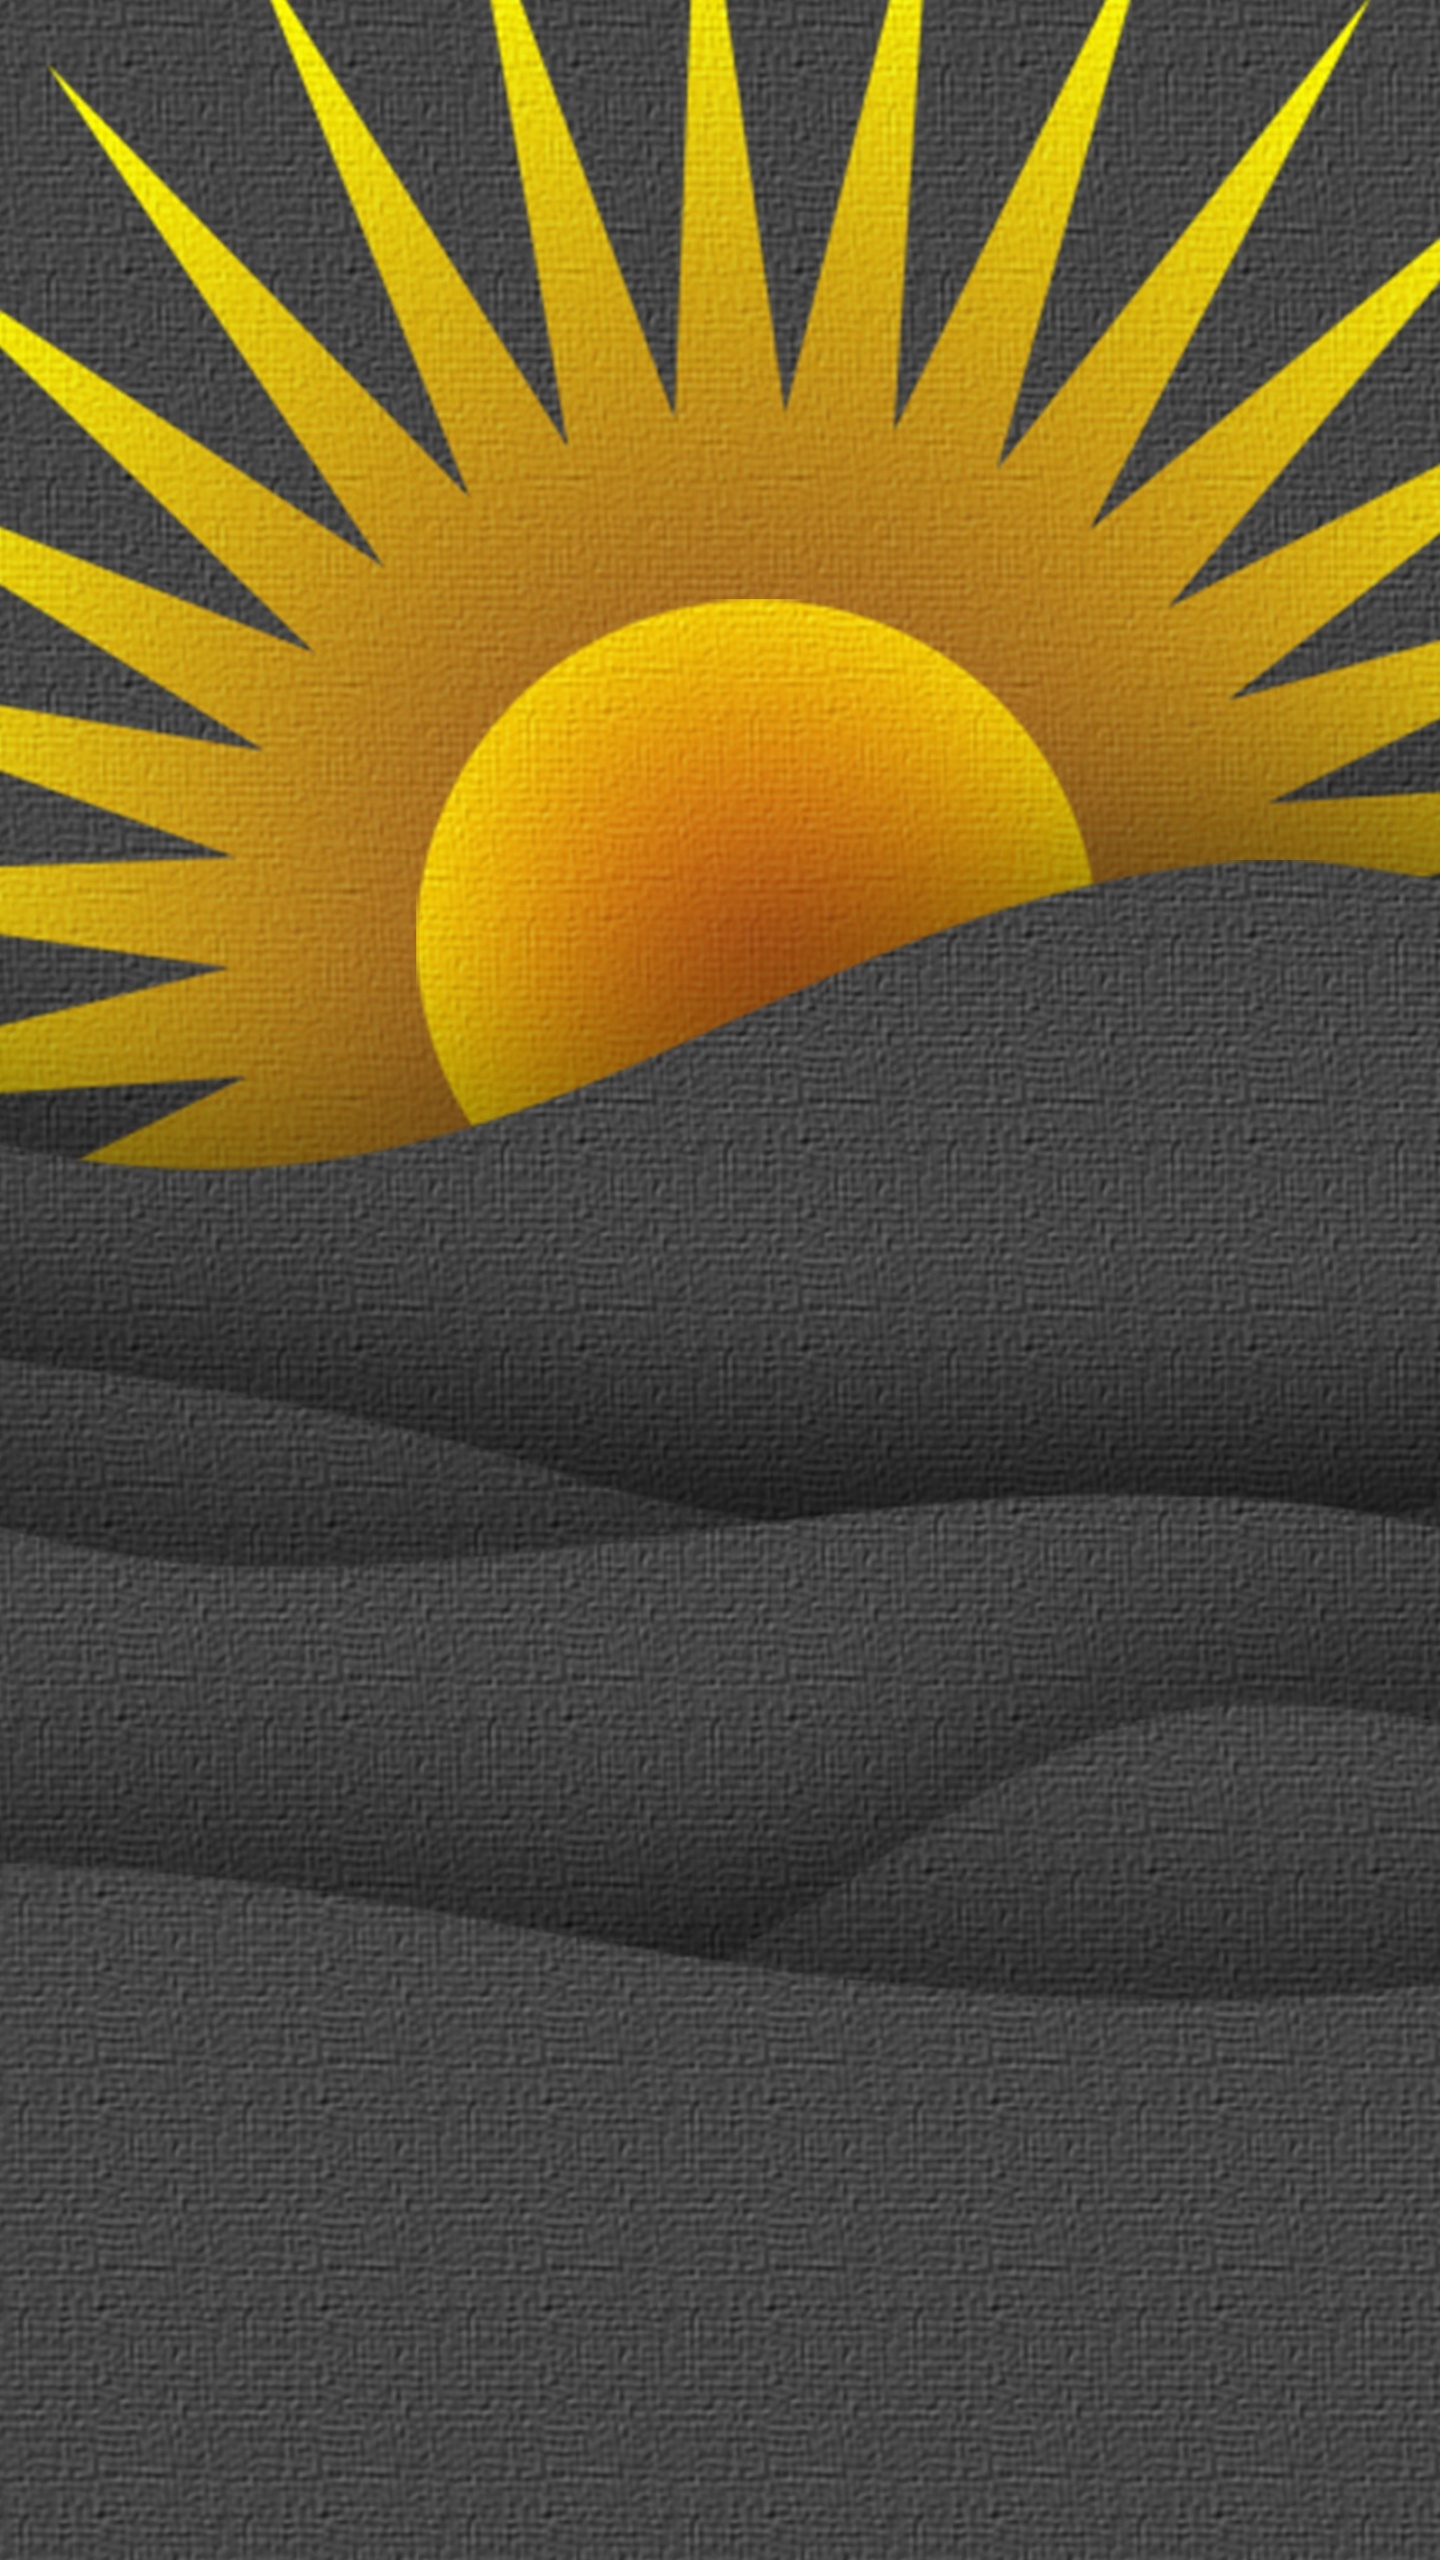 Soleil Sur Textile Noir Illustration. Wallpaper in 1440x2560 Resolution